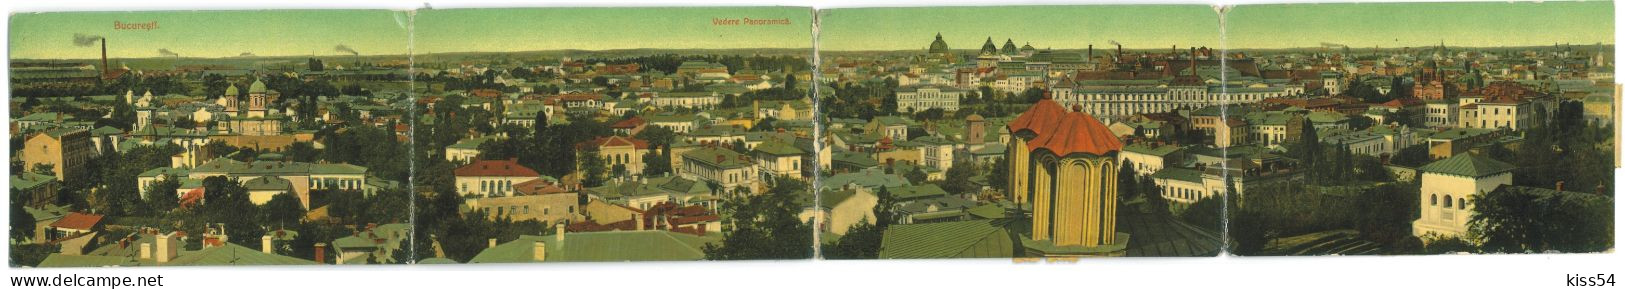 RO 97 - 23657 BUCURESTI, Panorama, Romania - Old 4 Postcards - Used - 1910 - Rumänien